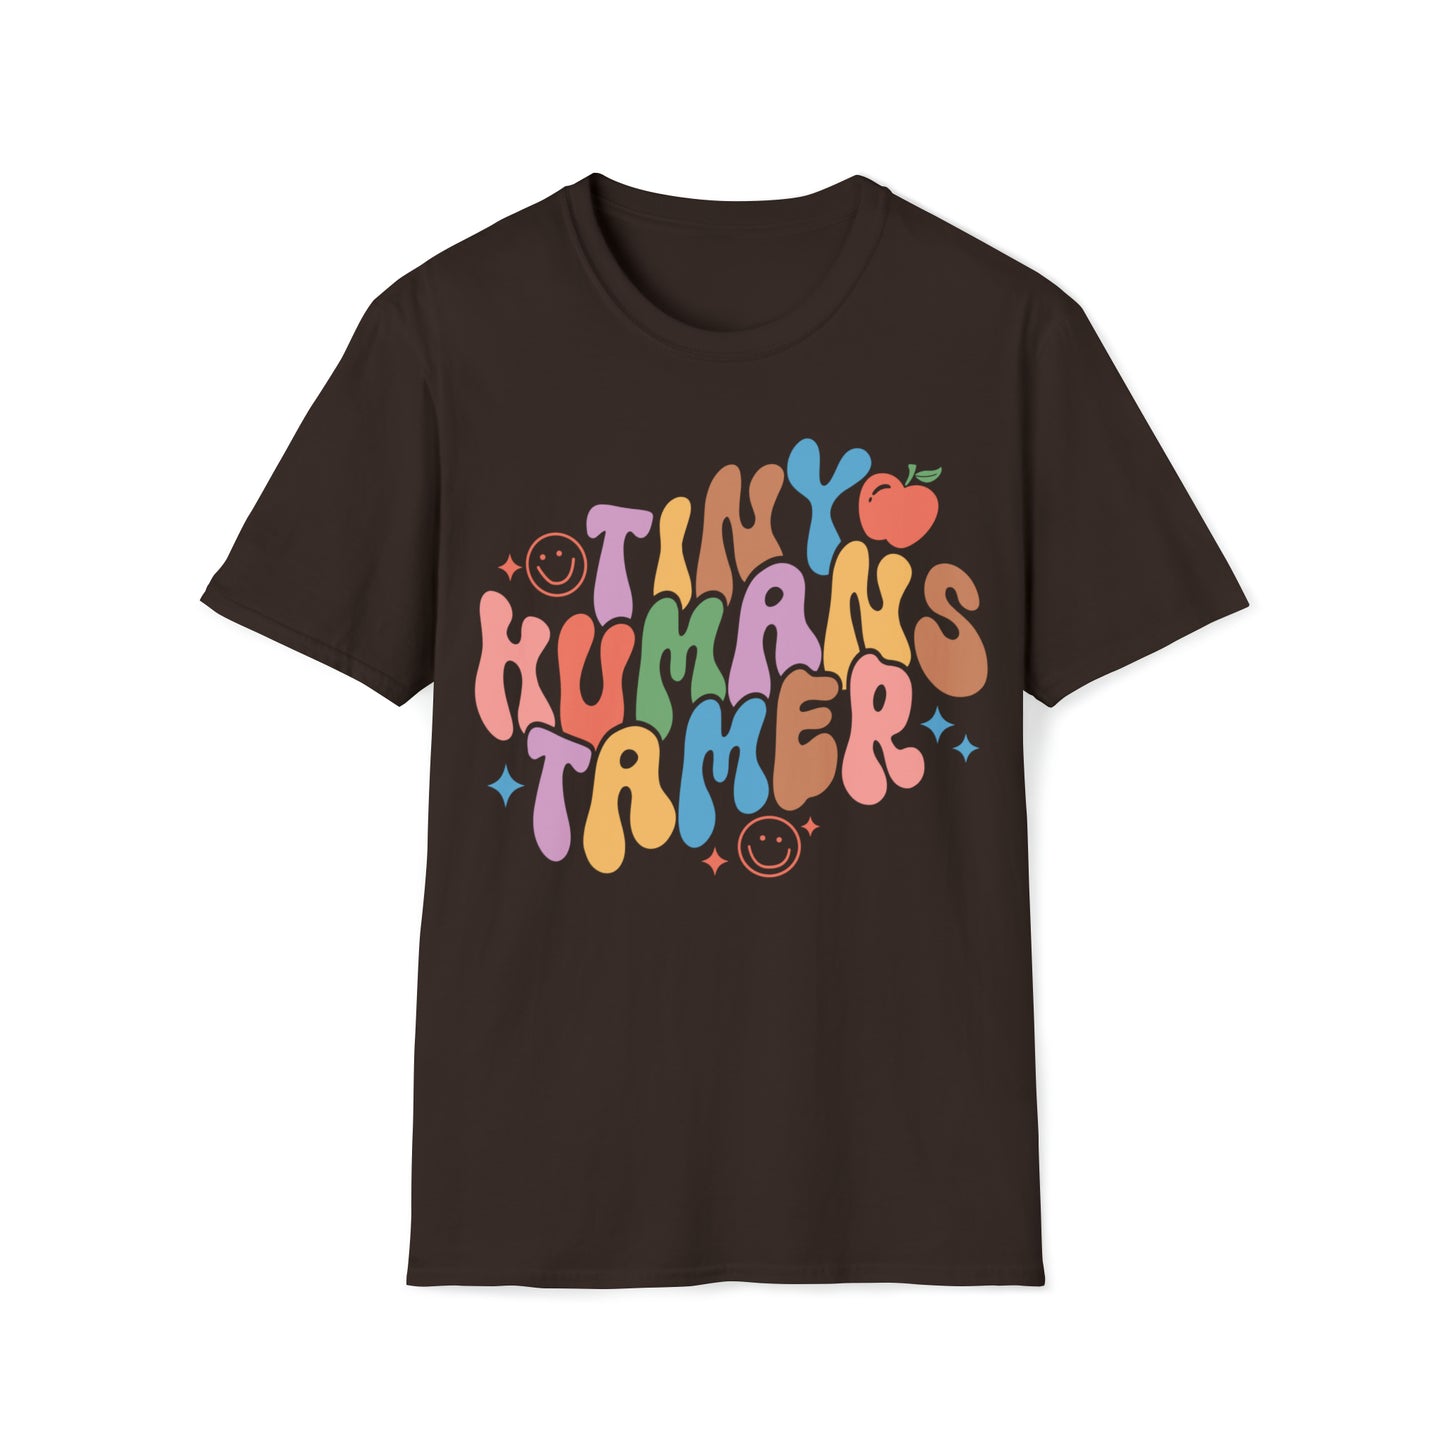 Tiny Human Tamer Shirt for Teachers